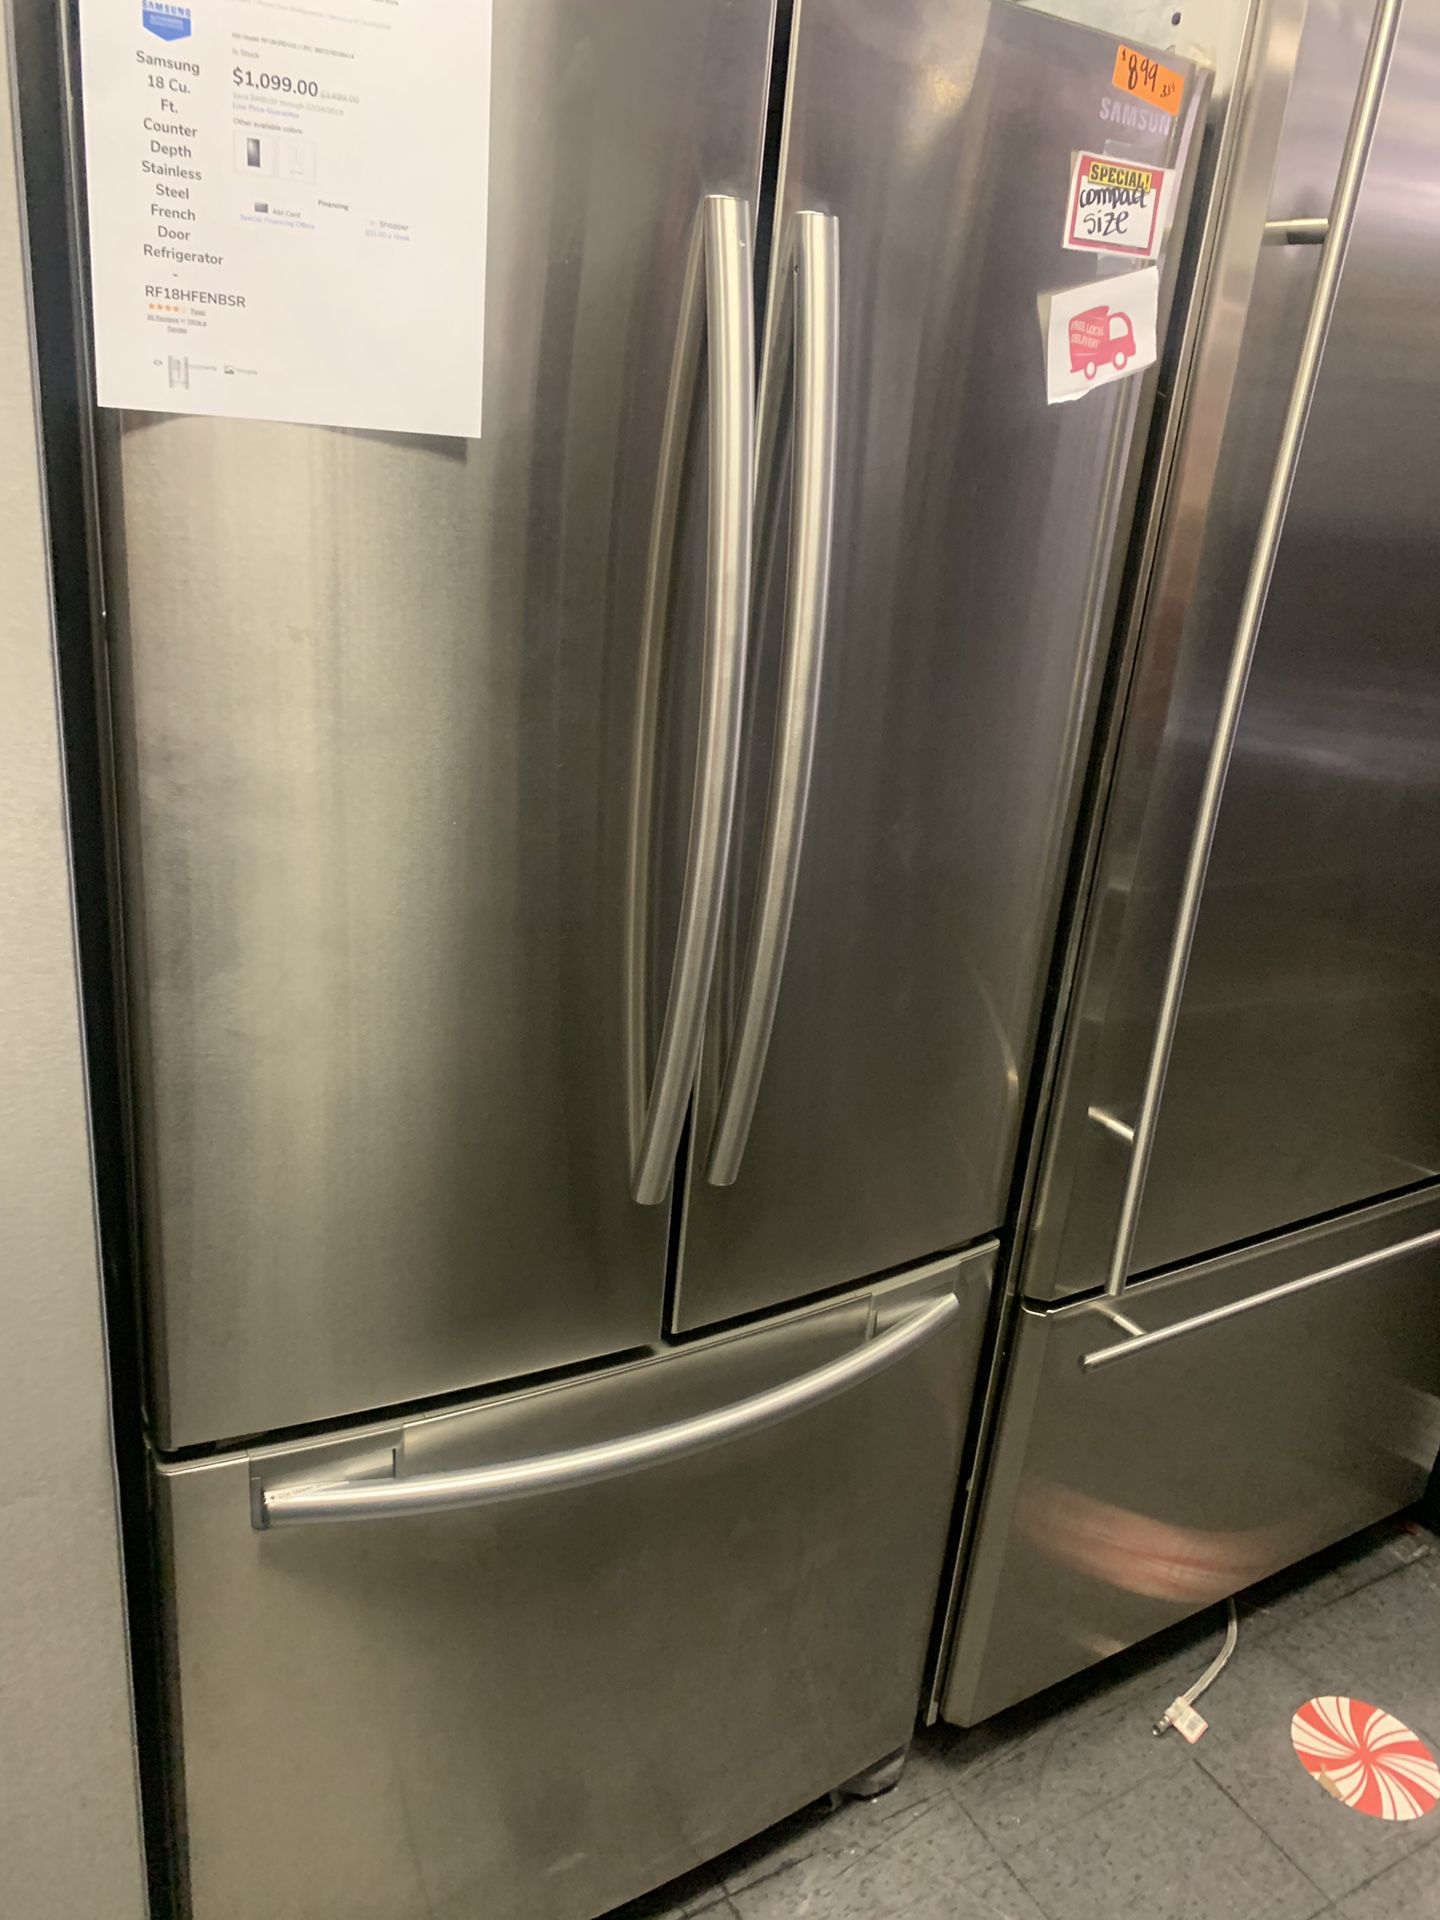 Samsung 33” counter depth refrigerator